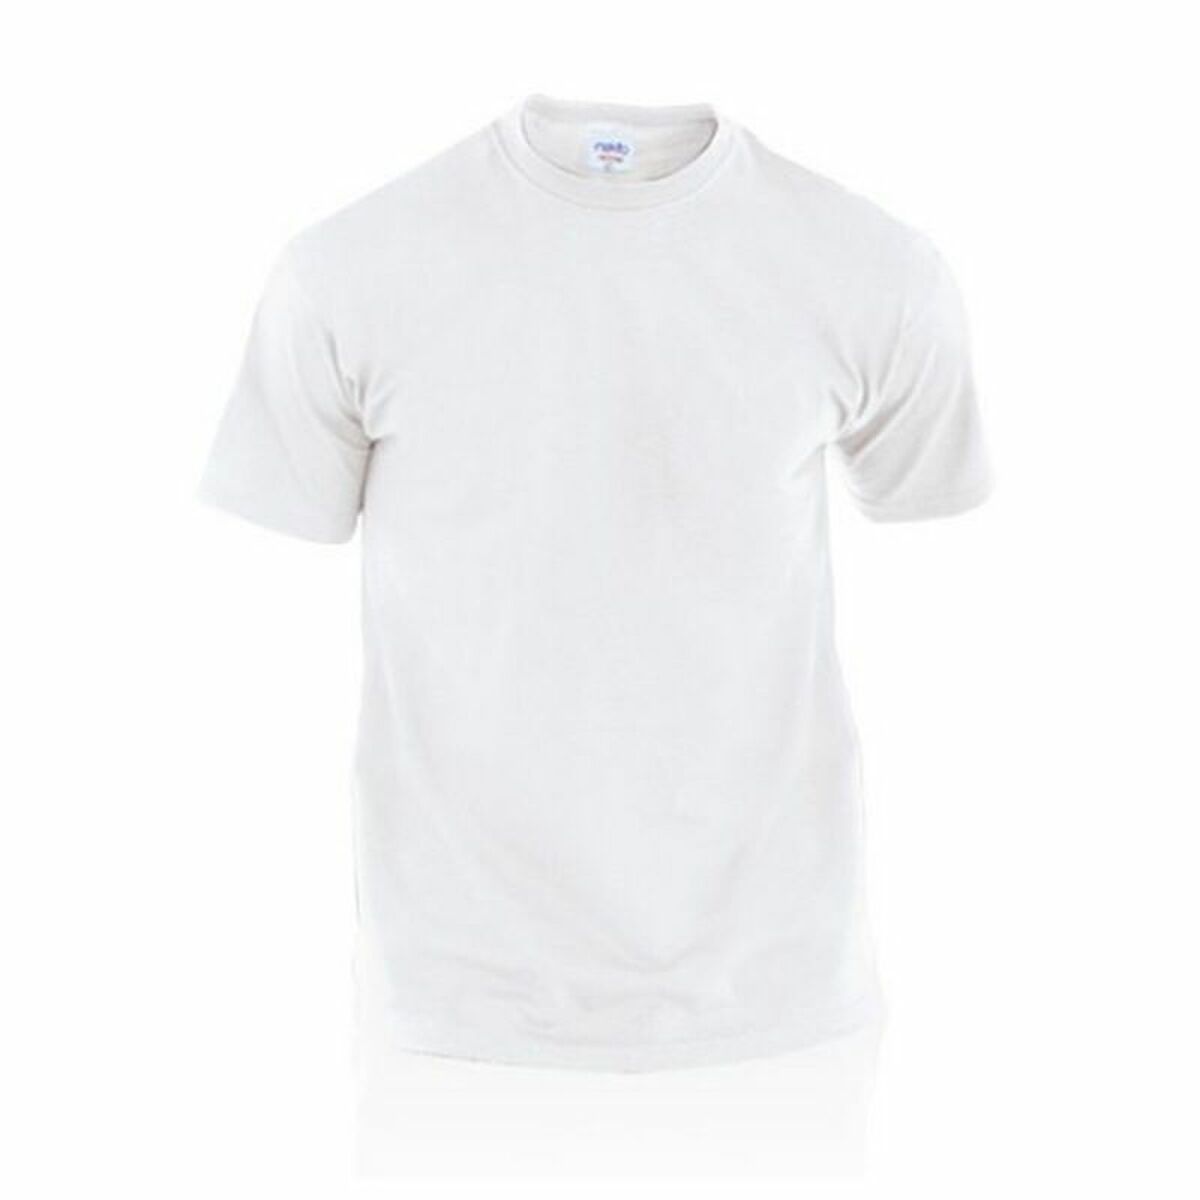 Unisex Short Sleeve T-Shirt 144199 White